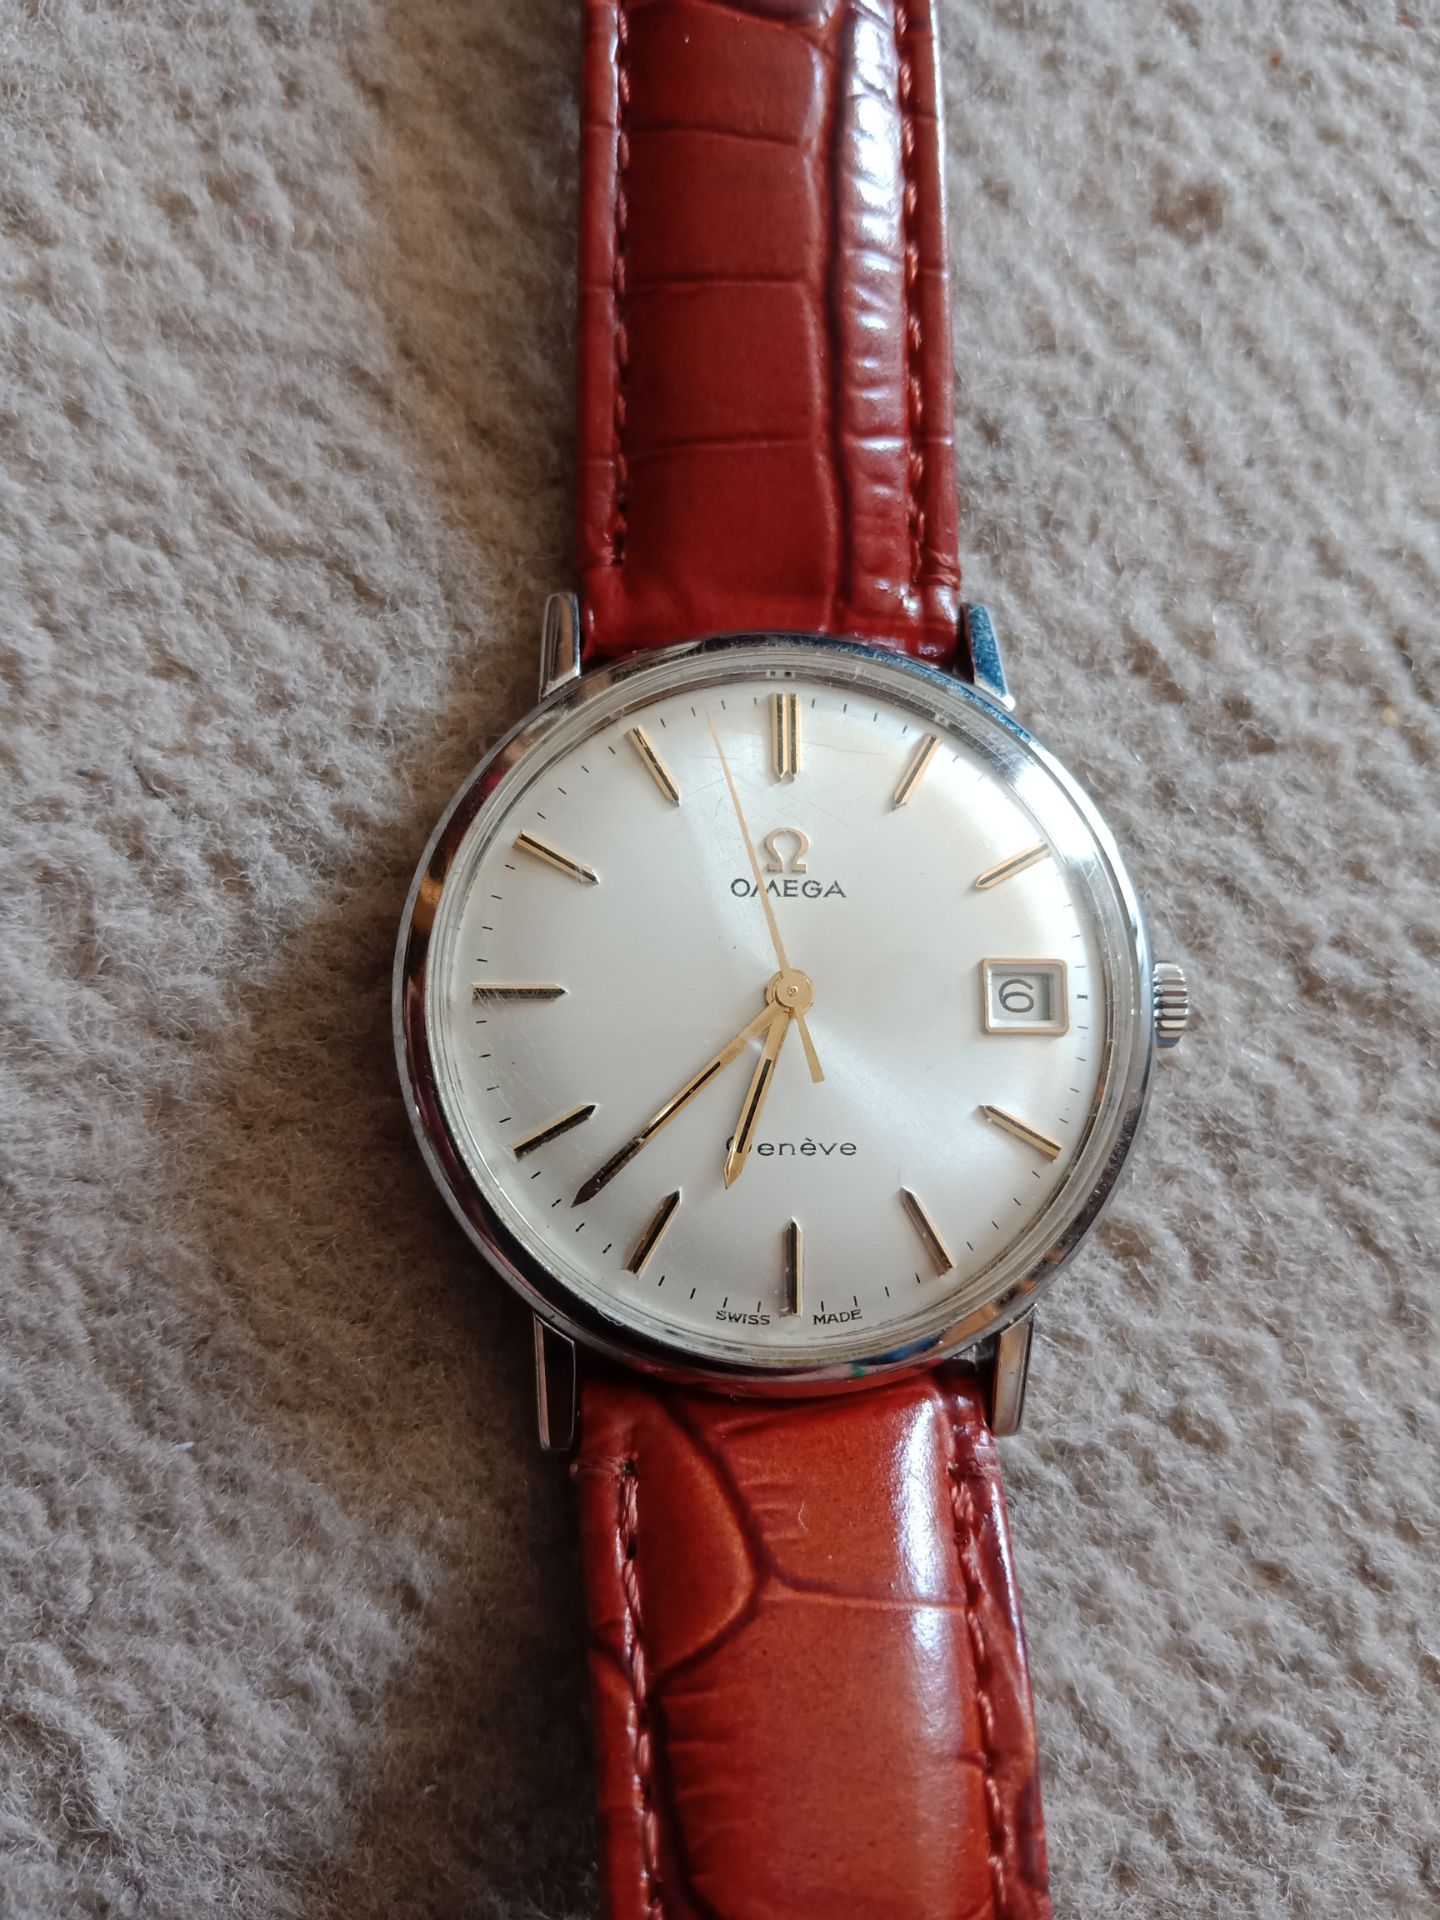 Vintage Omega Geneve wristwatch - Image 5 of 5